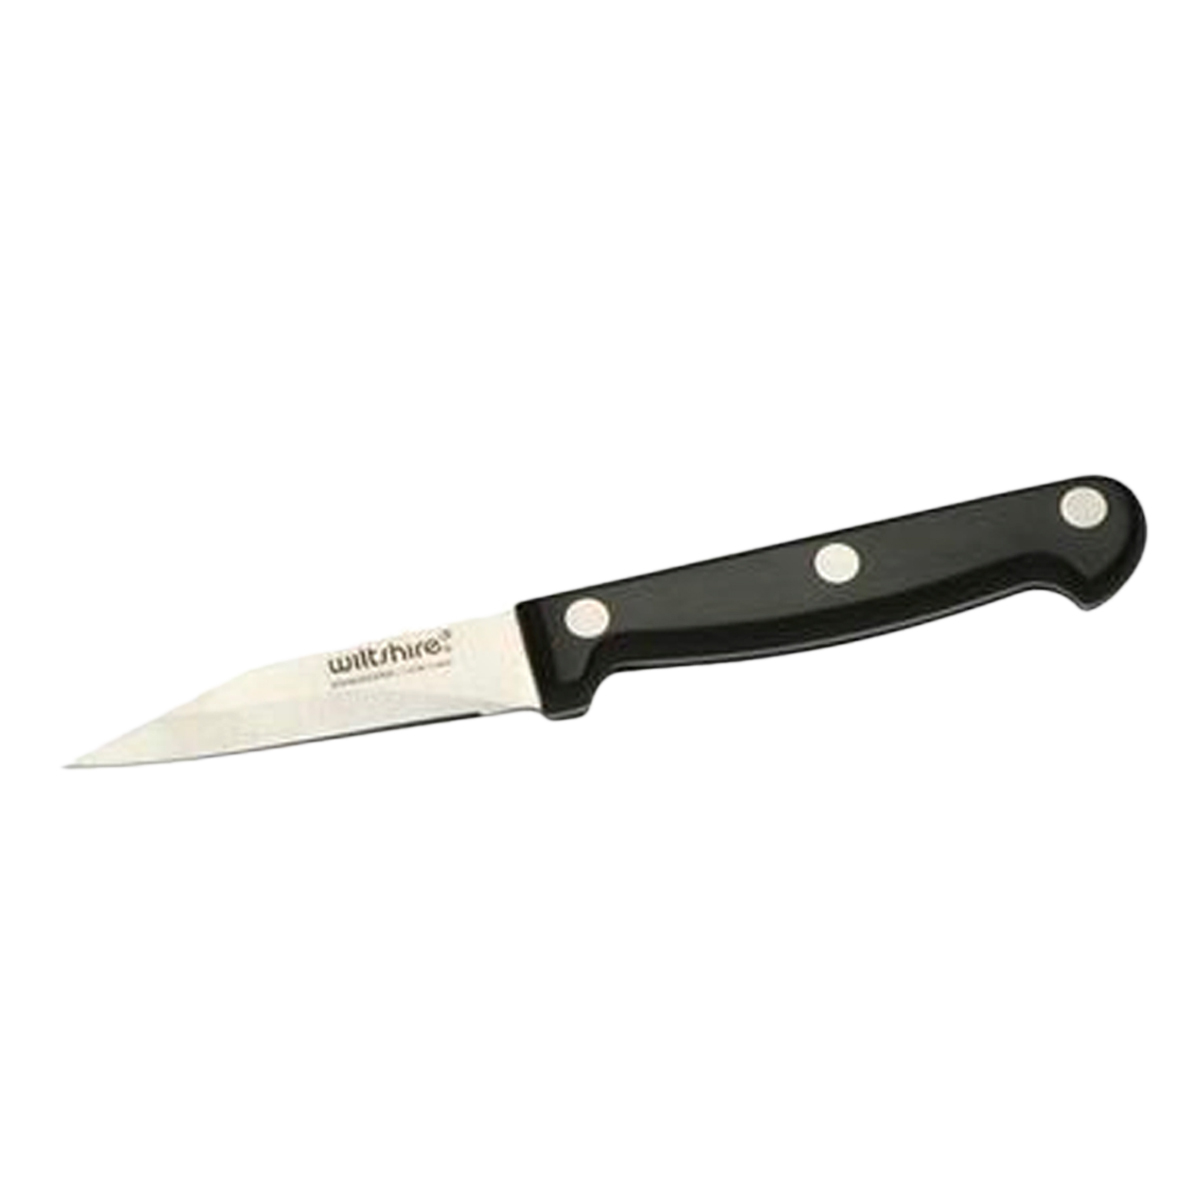 Kitchen Domain - Wiltshire Classic Paring Knife - 7.5cm